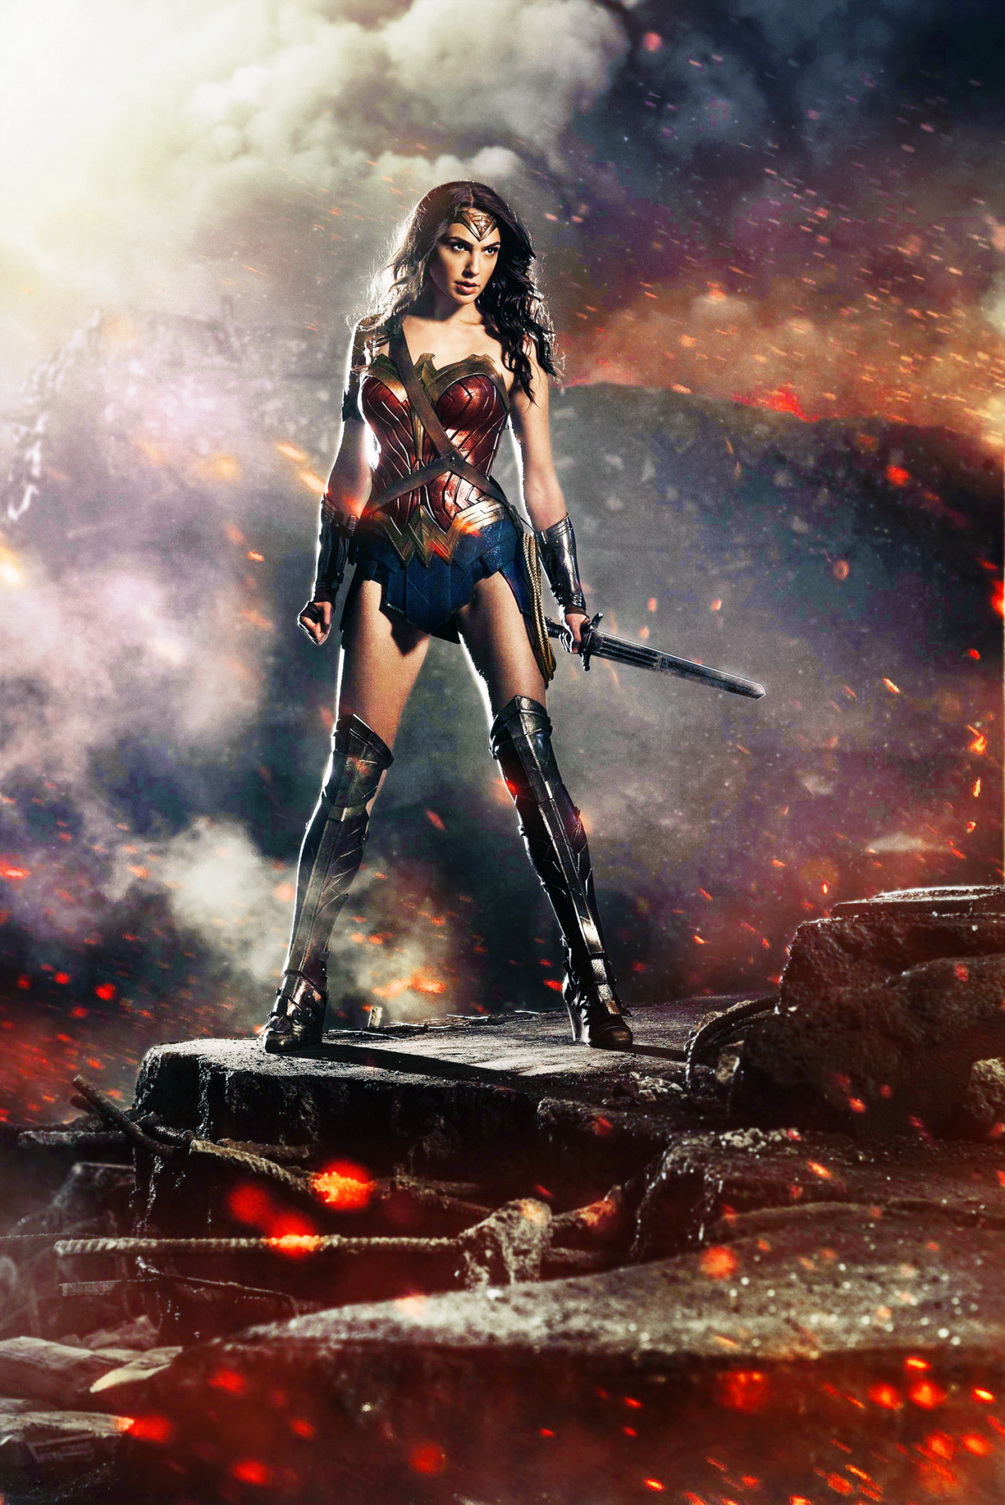 Gal Gadot 2015 : Gal Gadot: Superman vs Batman Wonder Woman Justice League Promopics and Posters -02